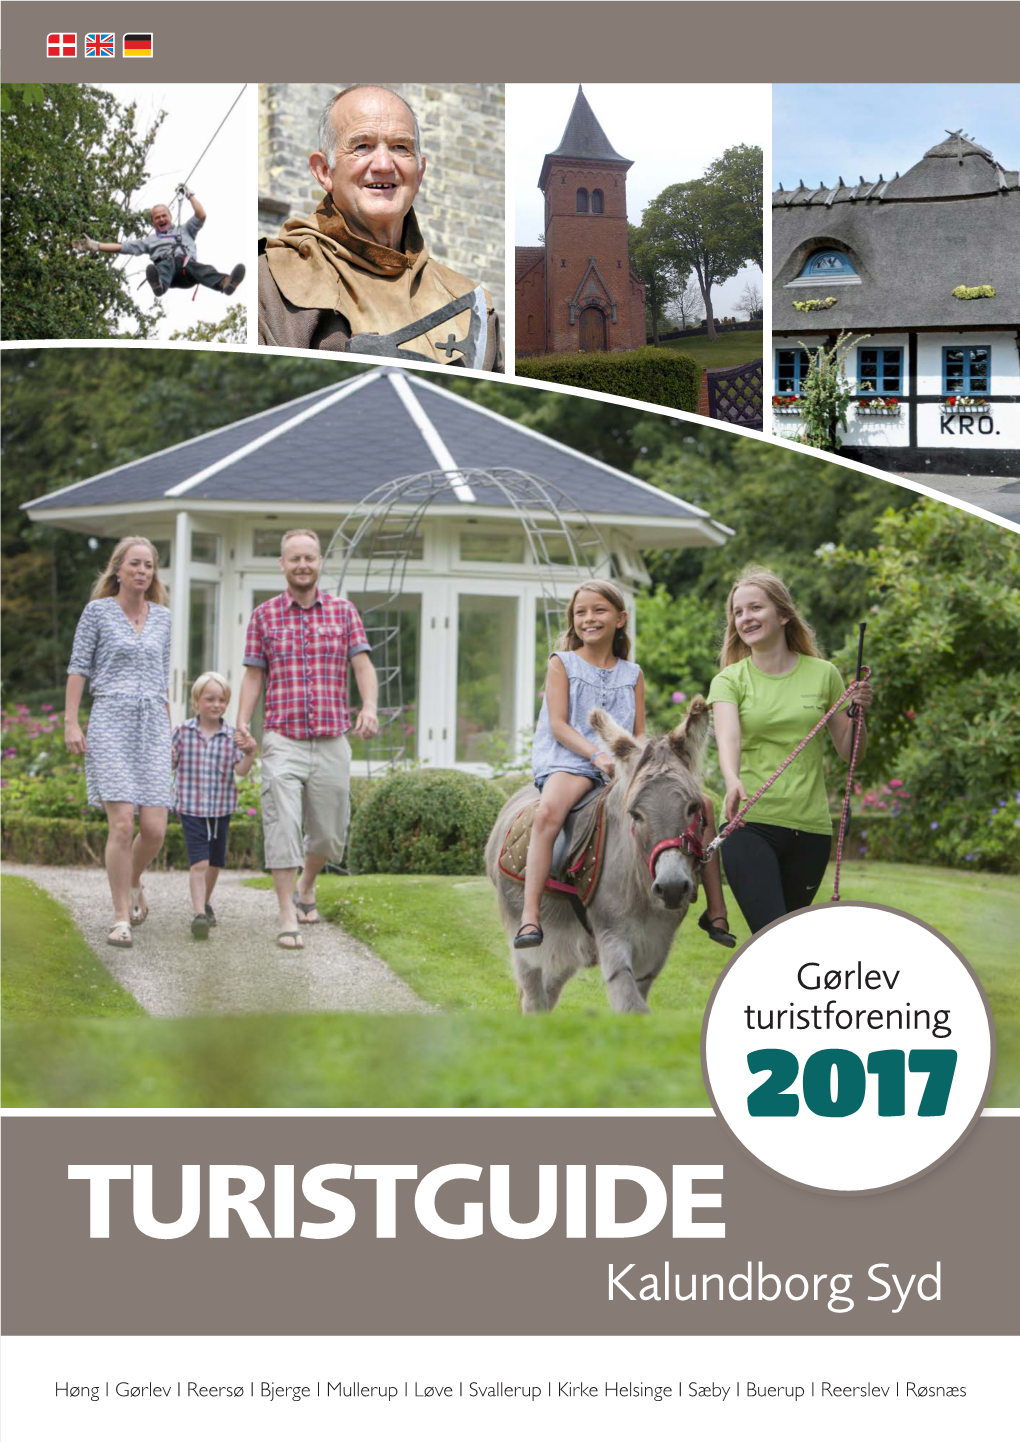 Gørlev Turistforening 2017 TURISTGUIDE Kalundborg Syd